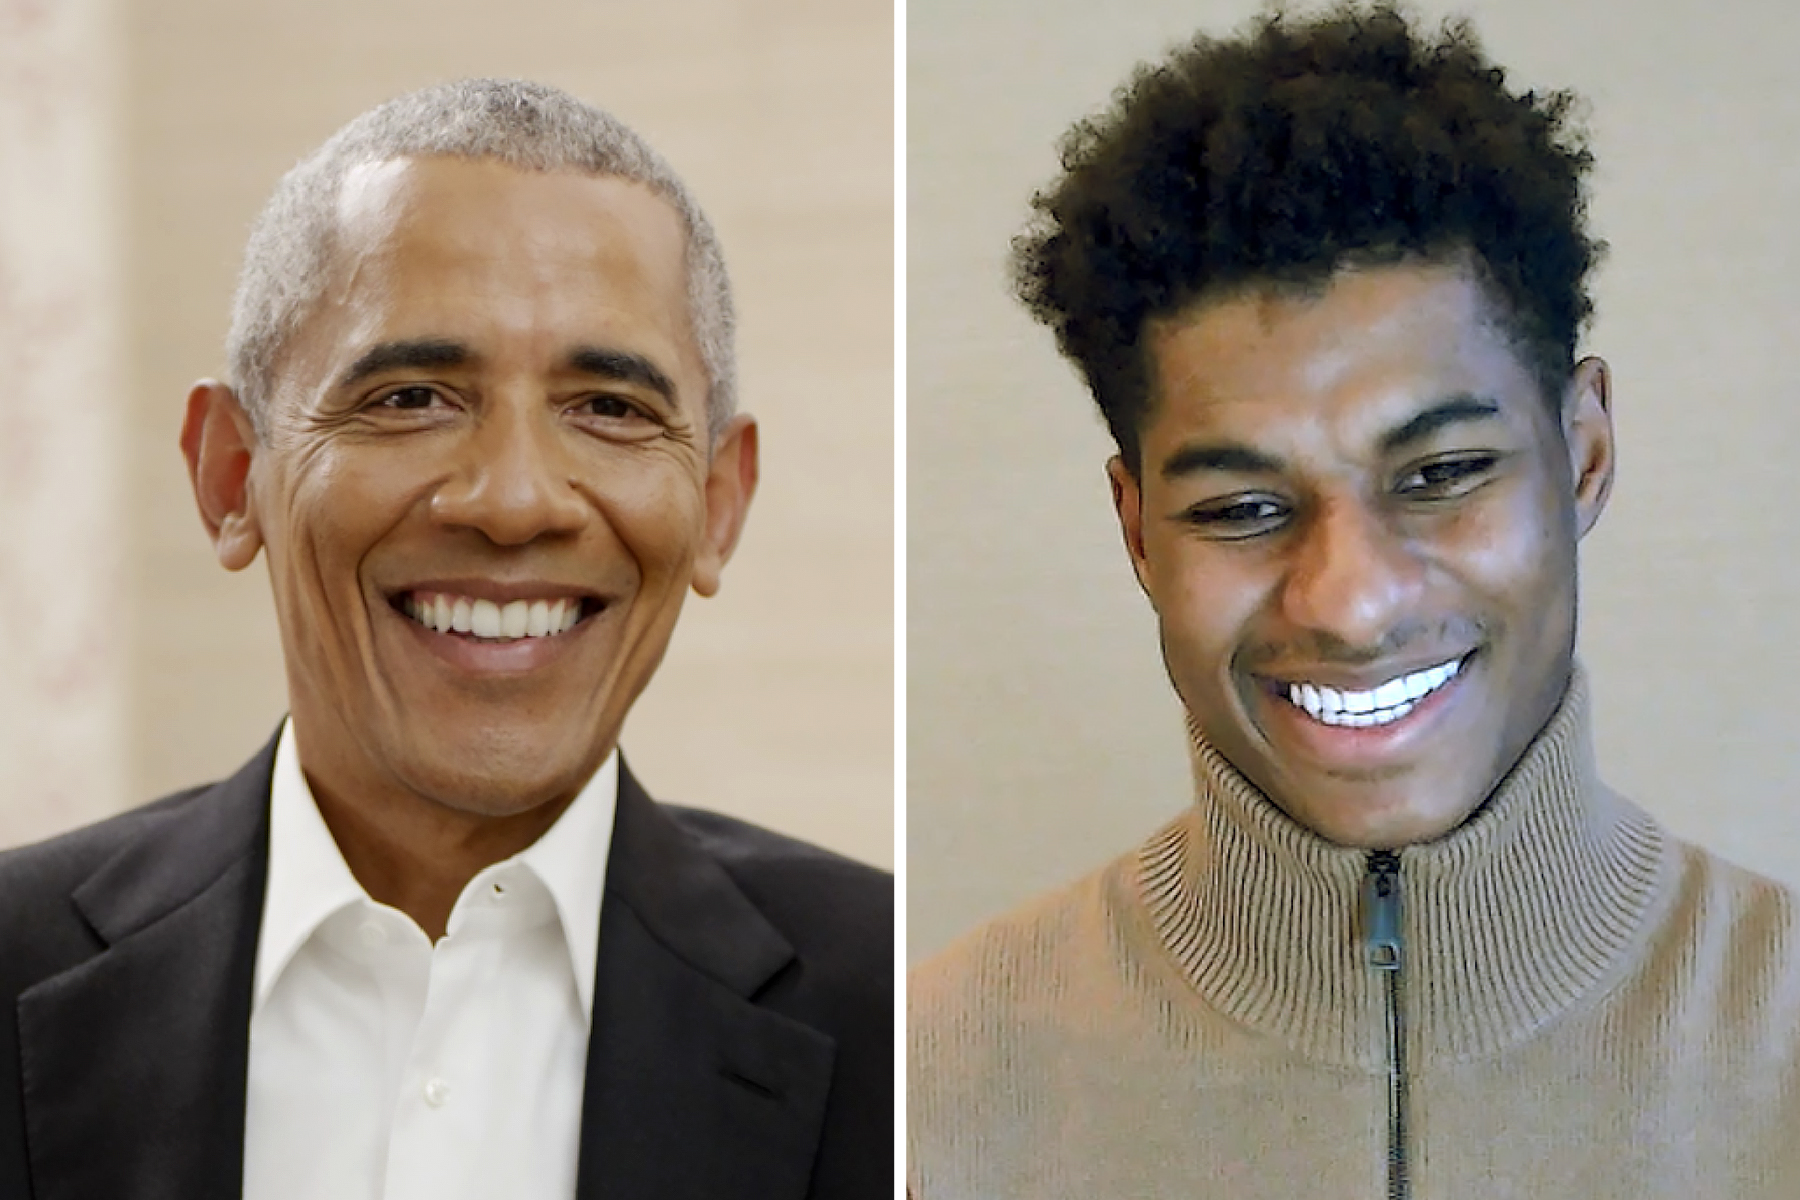 A photograph of Barack Obama and Marcus Rashford side-by-side